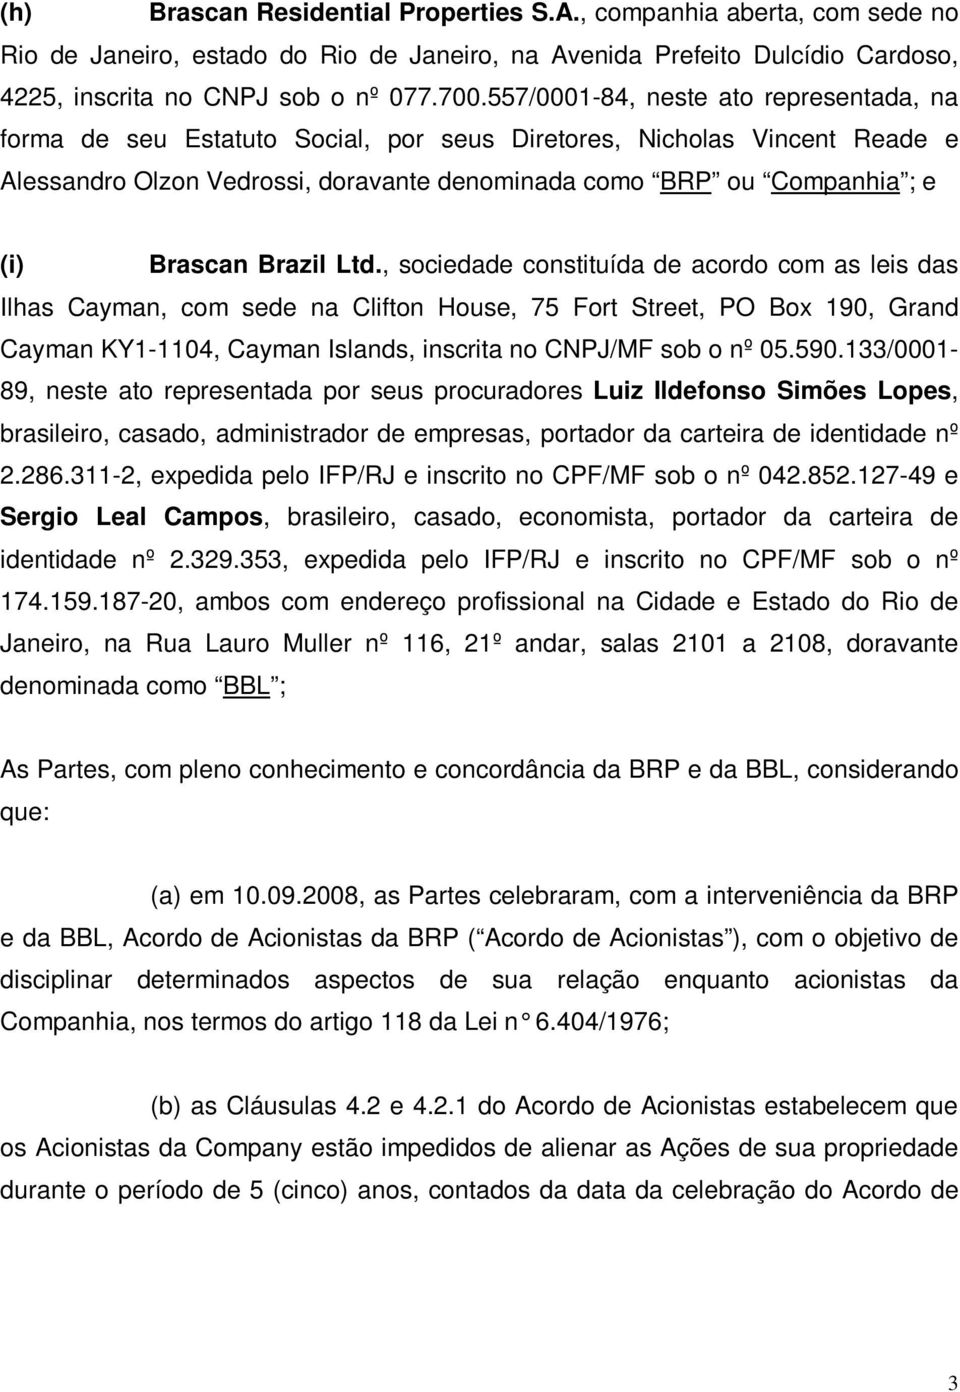 Brascan Brazil Ltd.